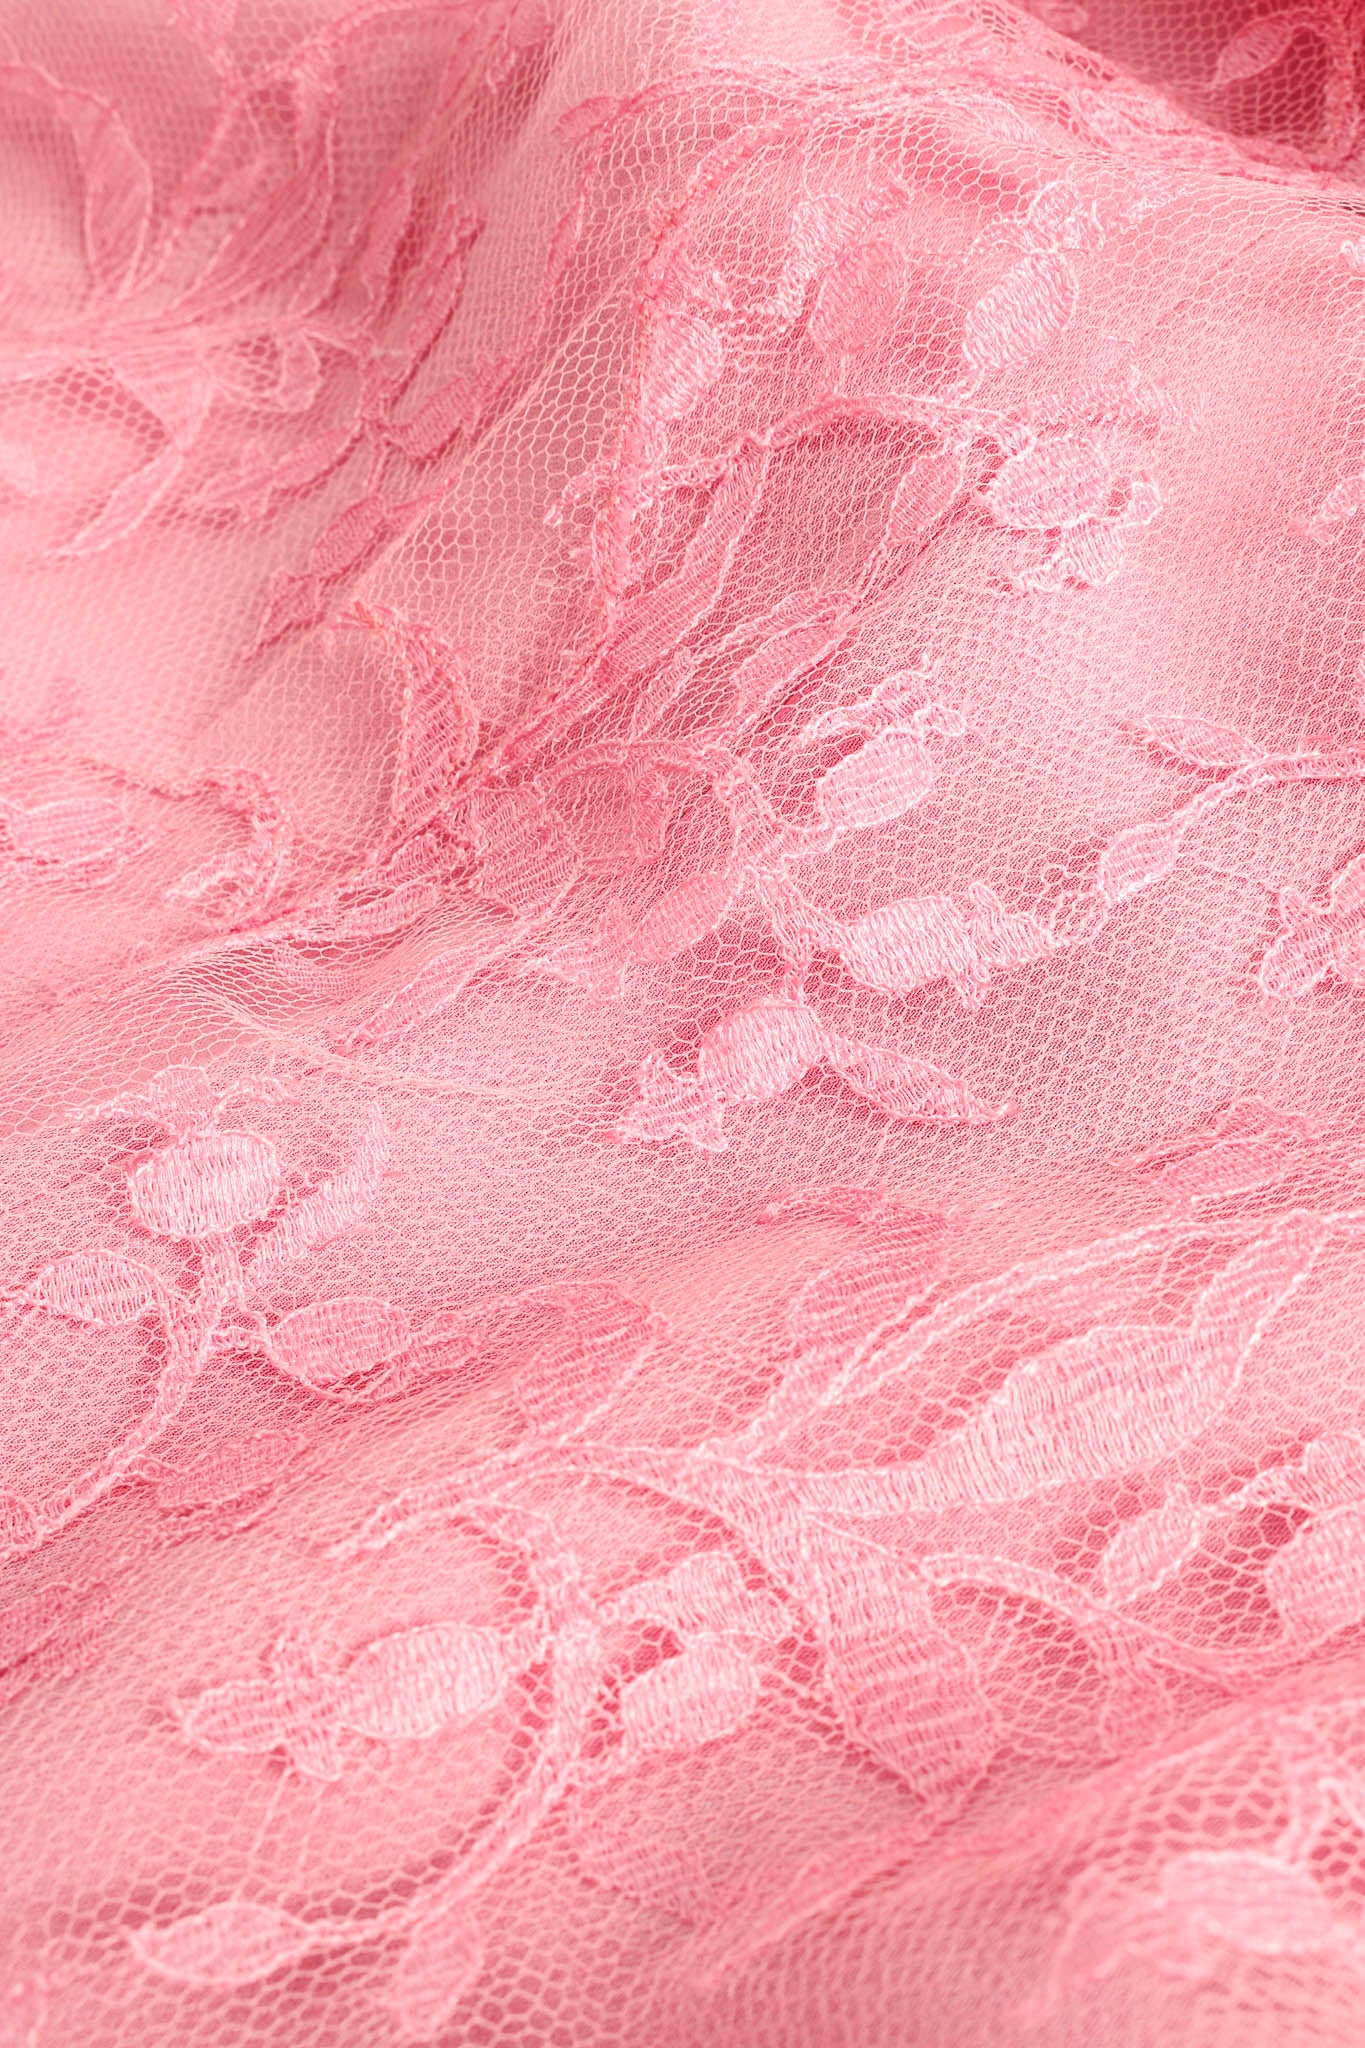 Gorgeous Haute Couture Gown by Pierre Cardin 1987 Lace Fabric Close-up. @recessla